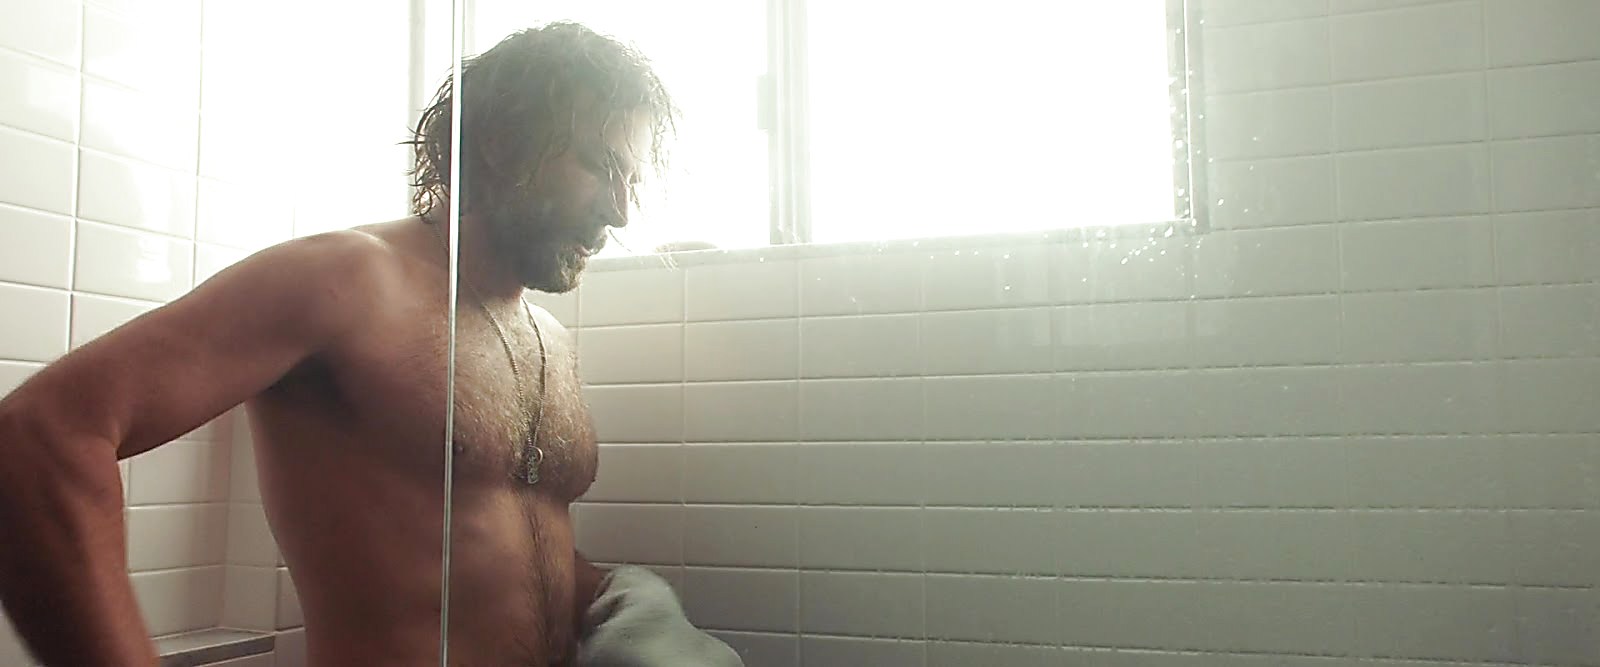 Bradley Cooper sexy shirtless scene January 16, 2019, 5am